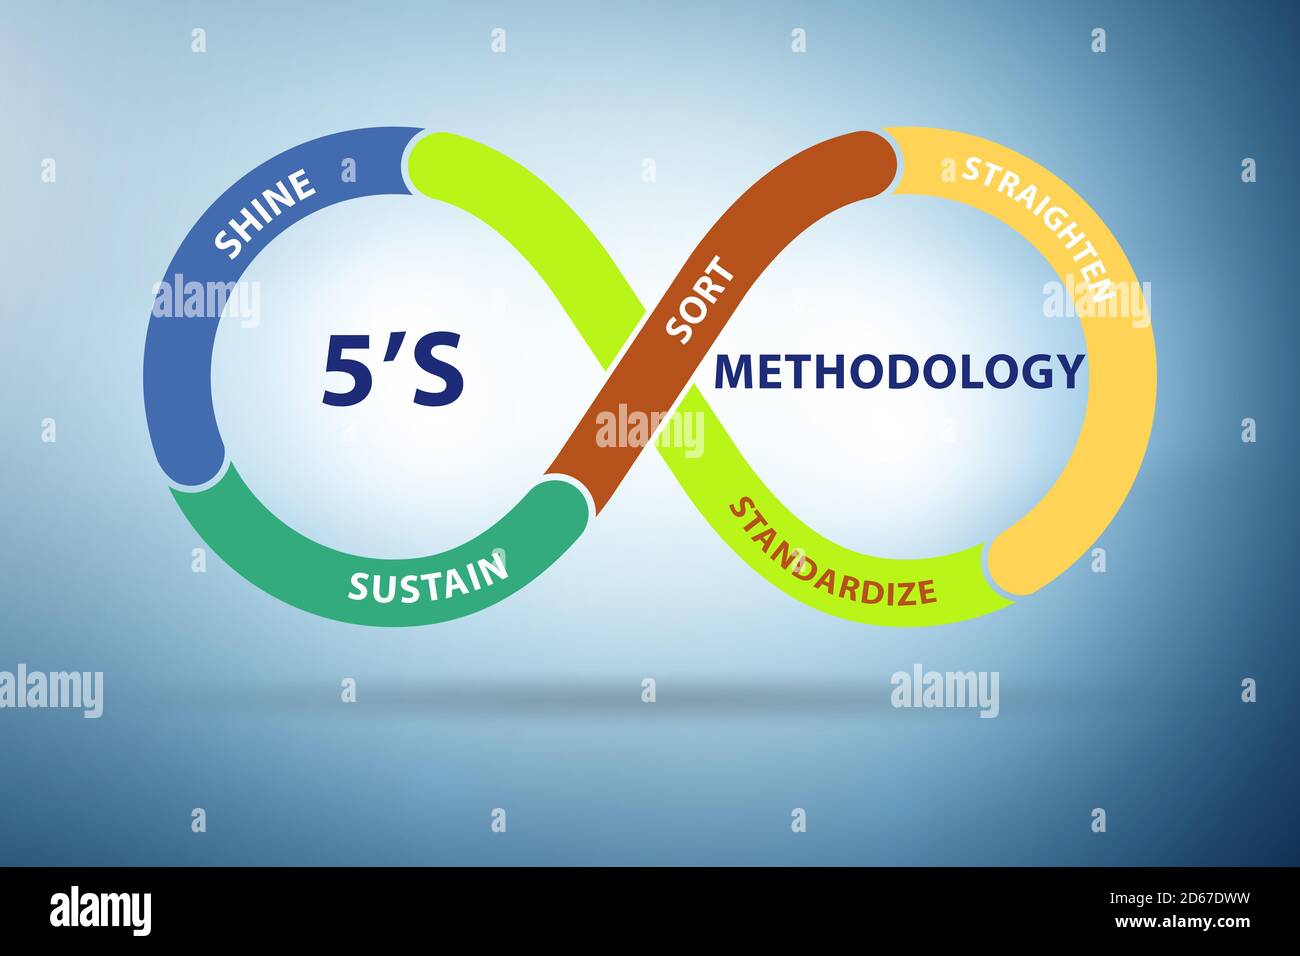 5S workplace organization method concept technique illustration Stock Photo